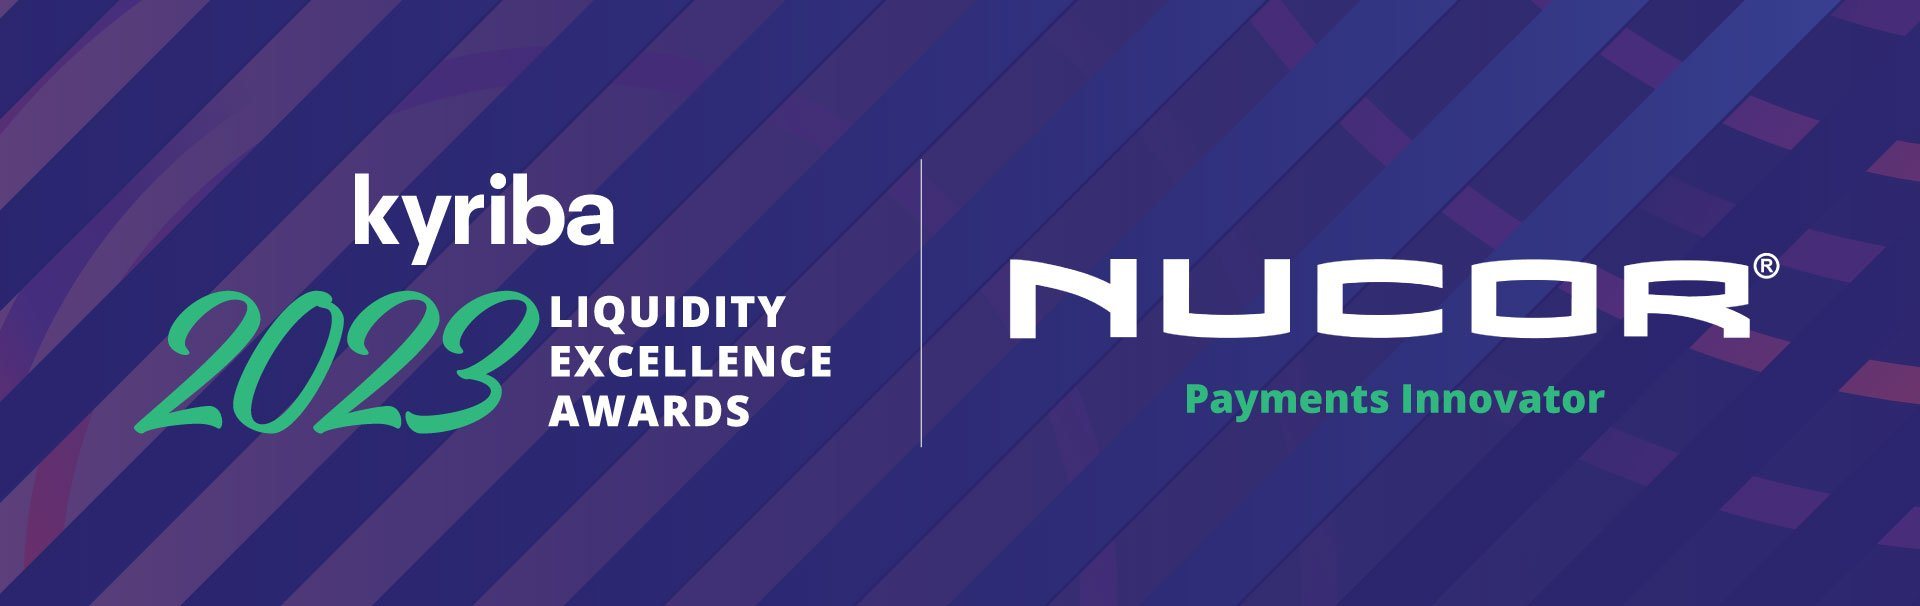 Nucor: Payments Innovator Award Winner